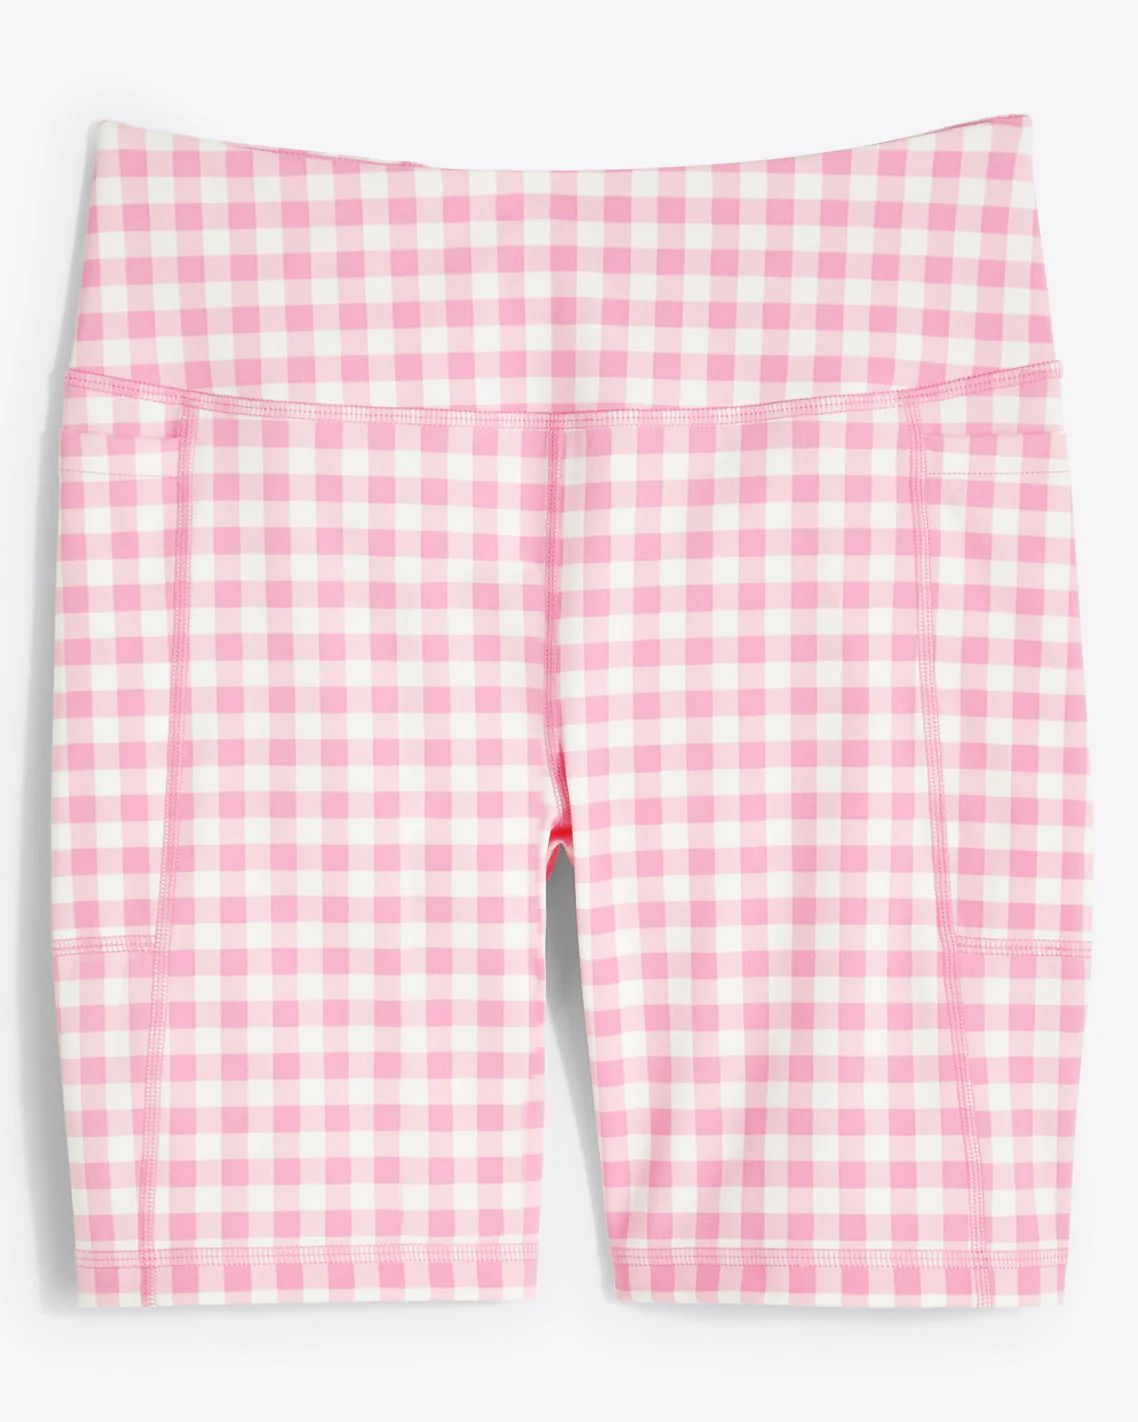 Bike Shorts in Pink Gingham | Draper James (US)